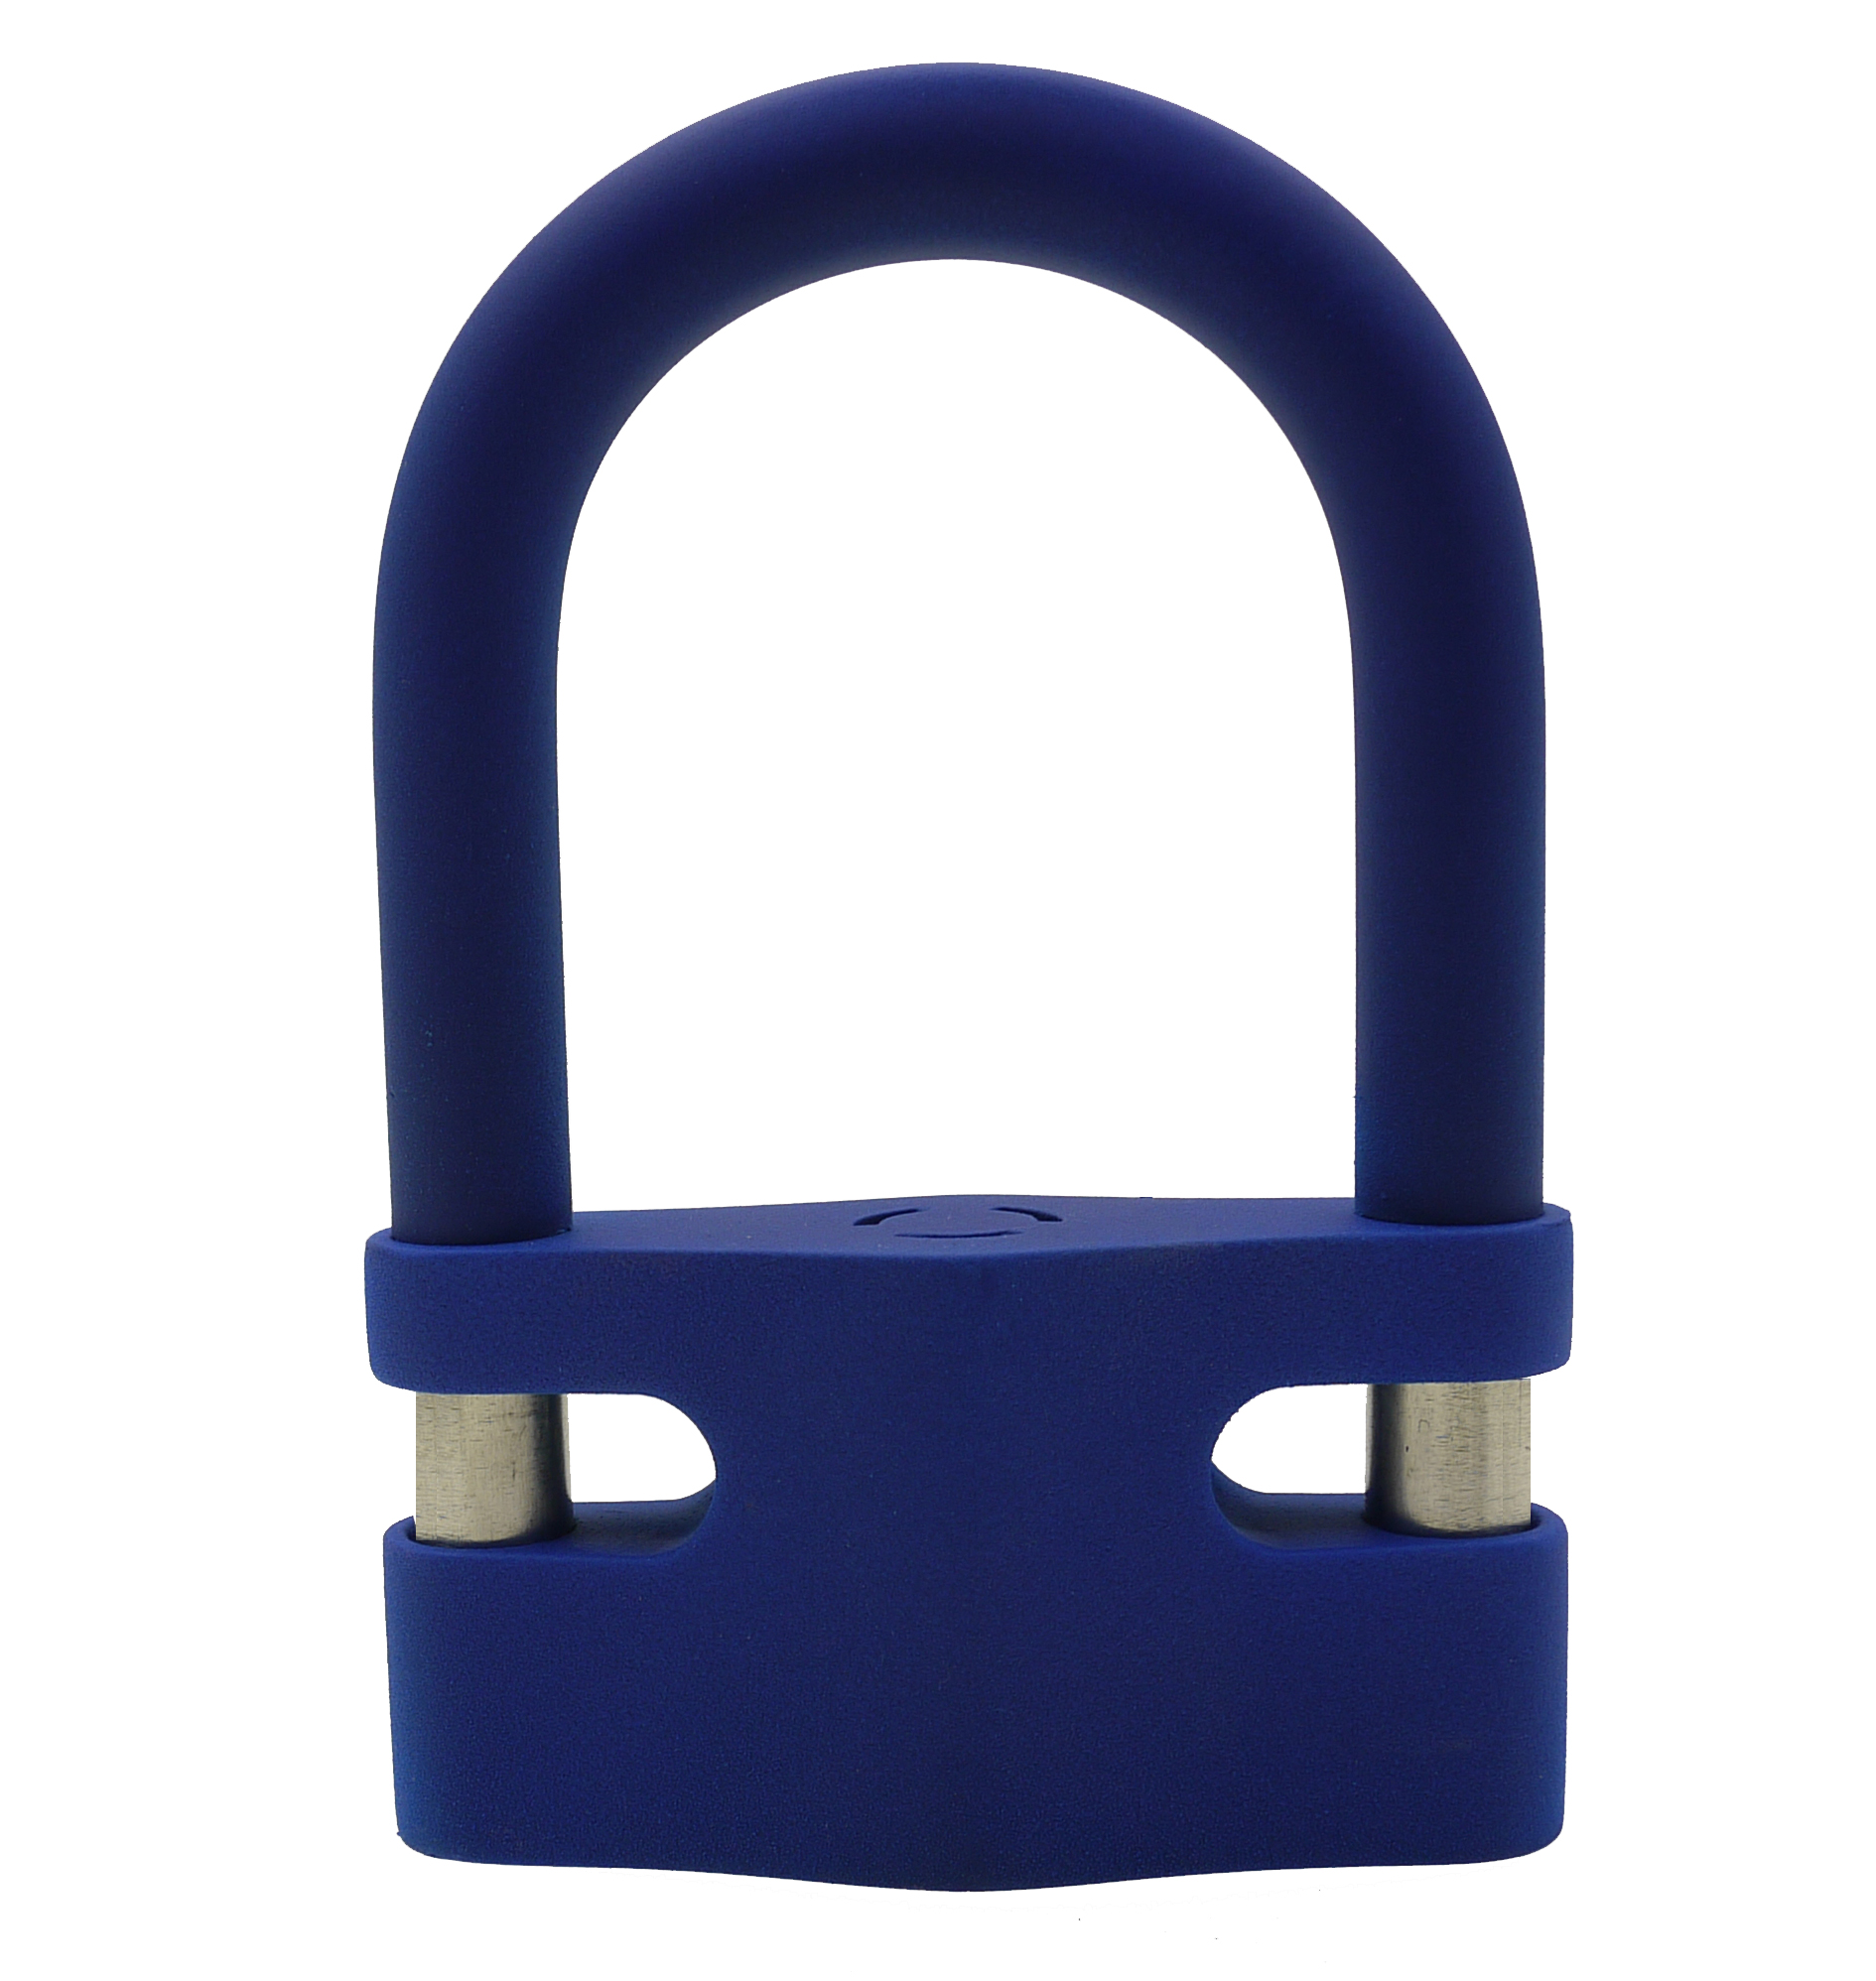 BLULOK®: High-security Bluetooth alarmed bike lock